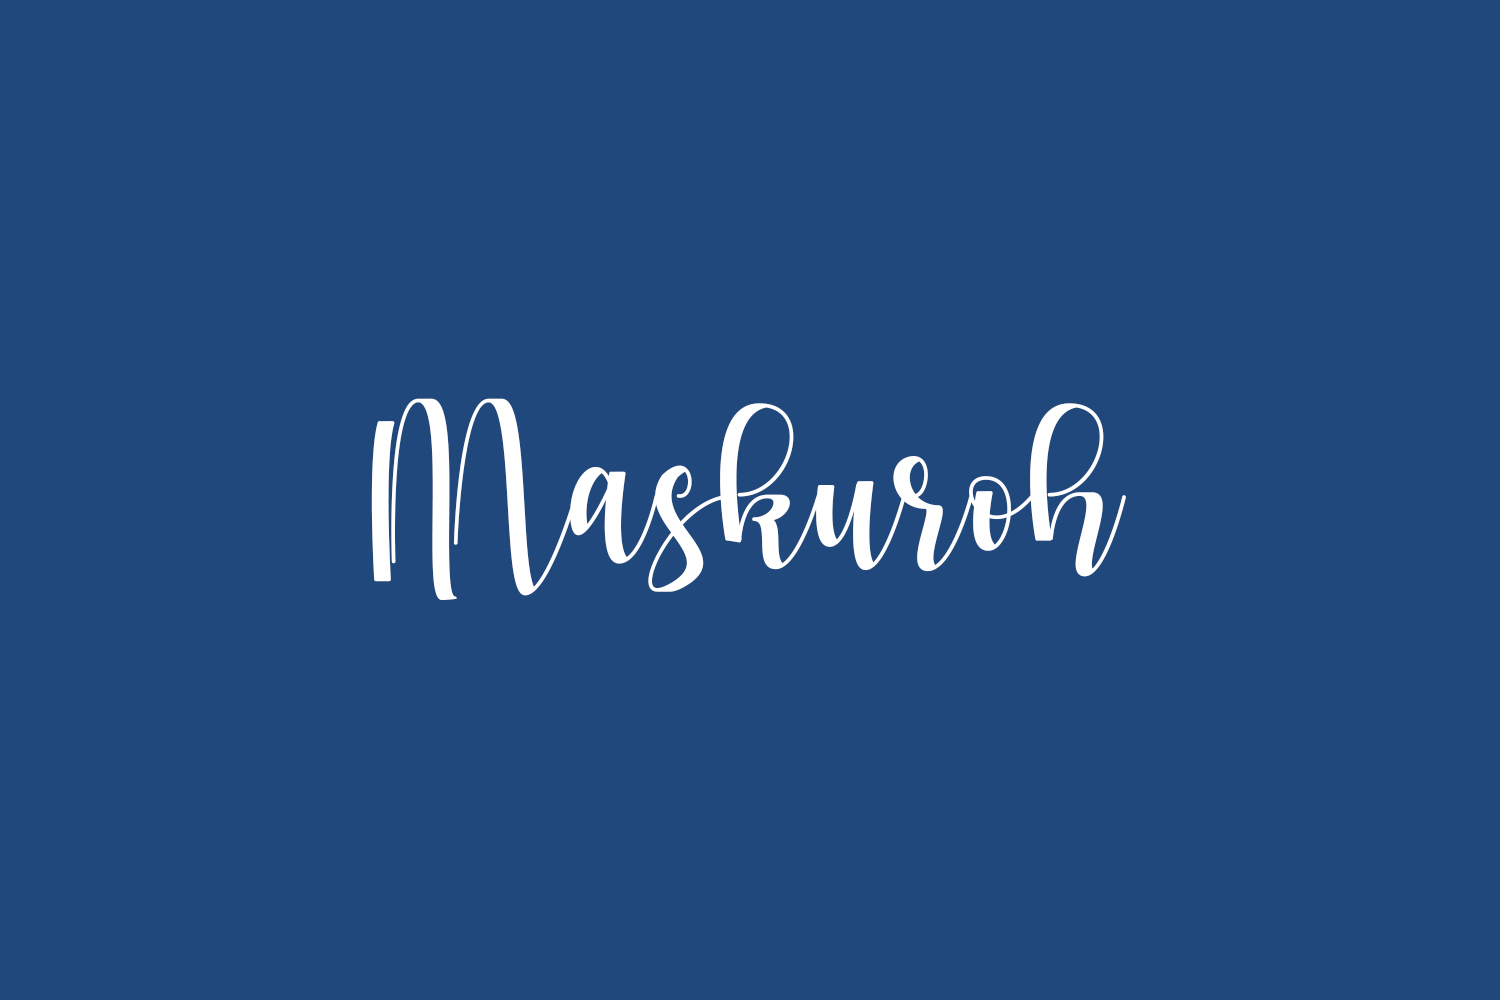 Maskuroh Free Font